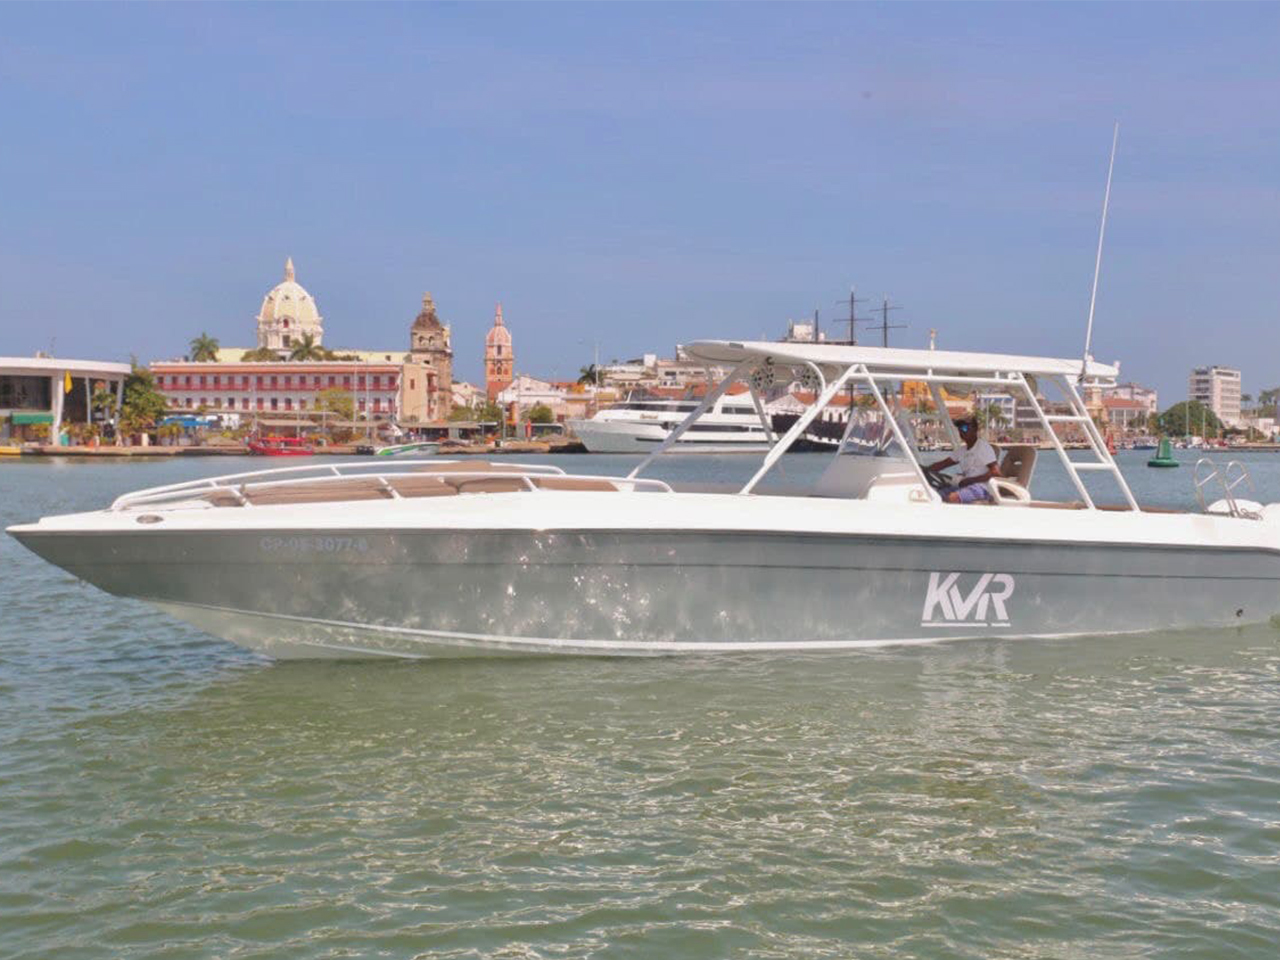 38 Ft' Speed Boat KVR - Classy Cartagena